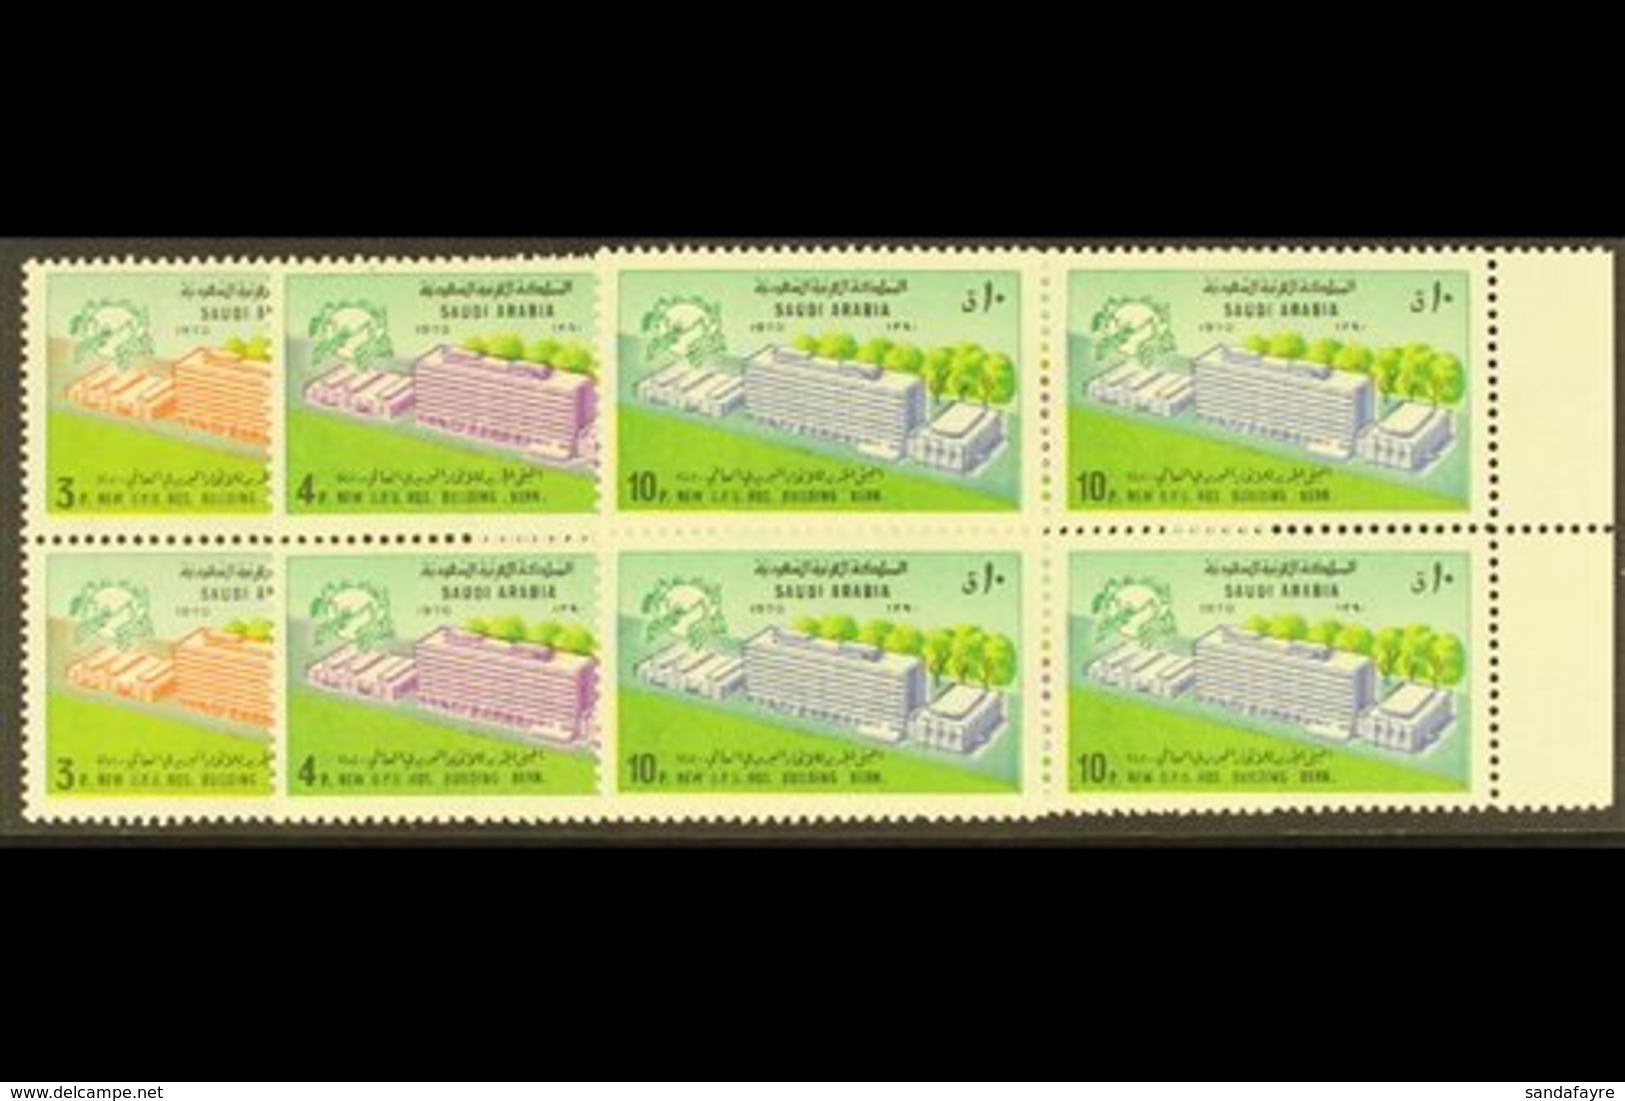 1974  Inauguration Of UPU Headquarters Set Complete, SG 1084/6, In Never Hinged Marginal Blocks Of 4. (12 Stamps) For Mo - Arabia Saudita